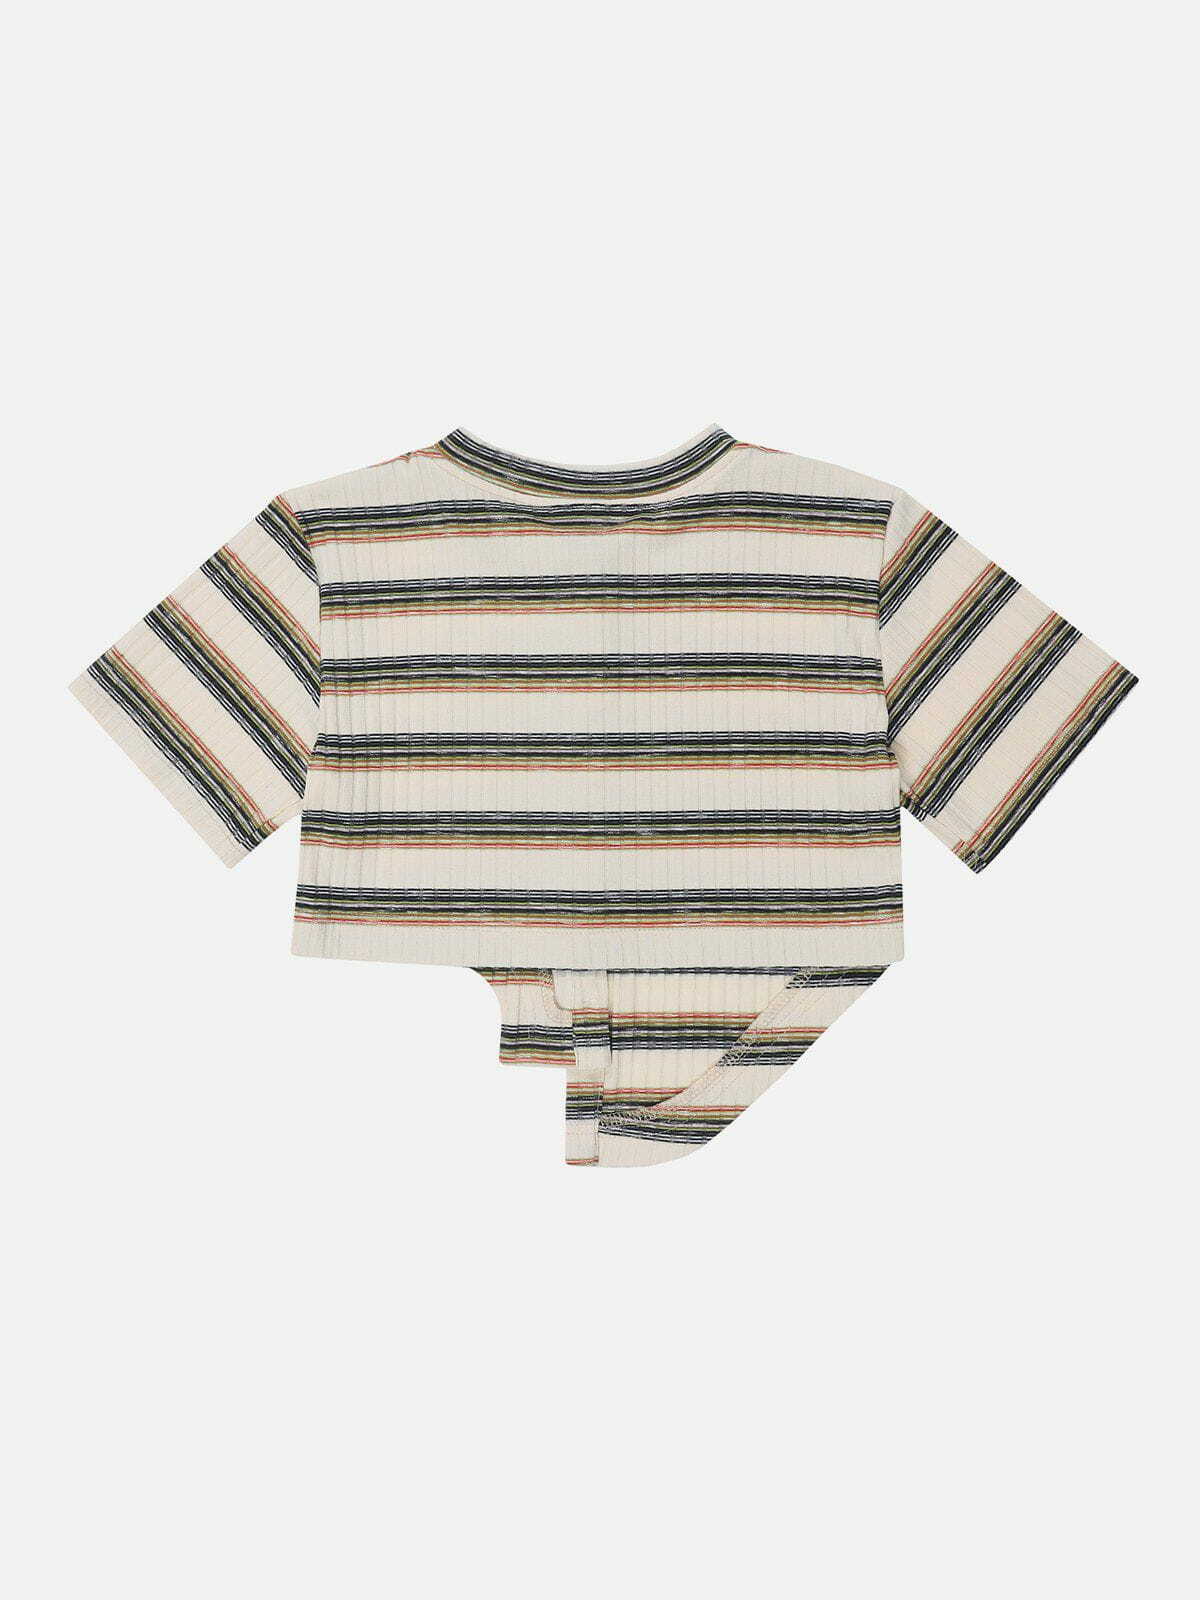 vibrant stripes tee edgy retro streetwear fashion 5620